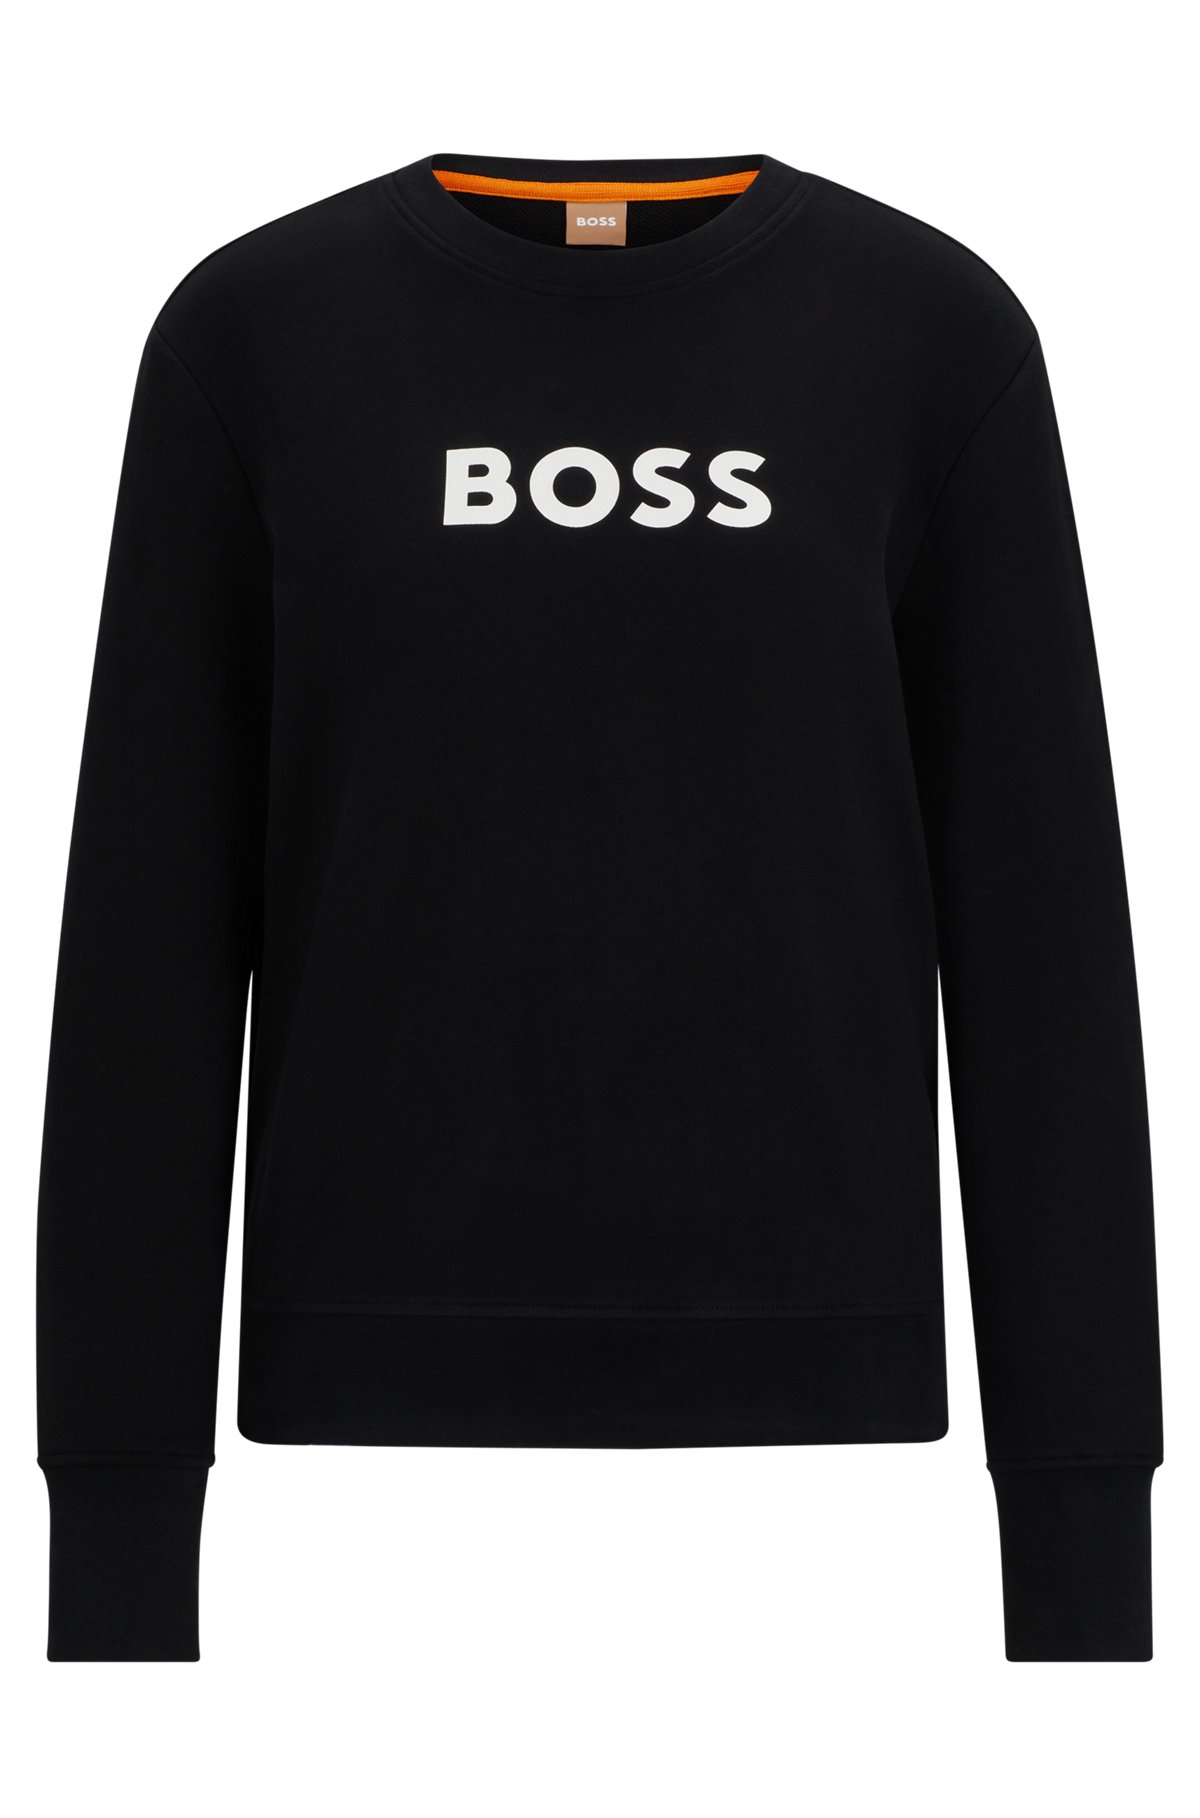 Cotton-terry sweatshirt with contrast logo, Black